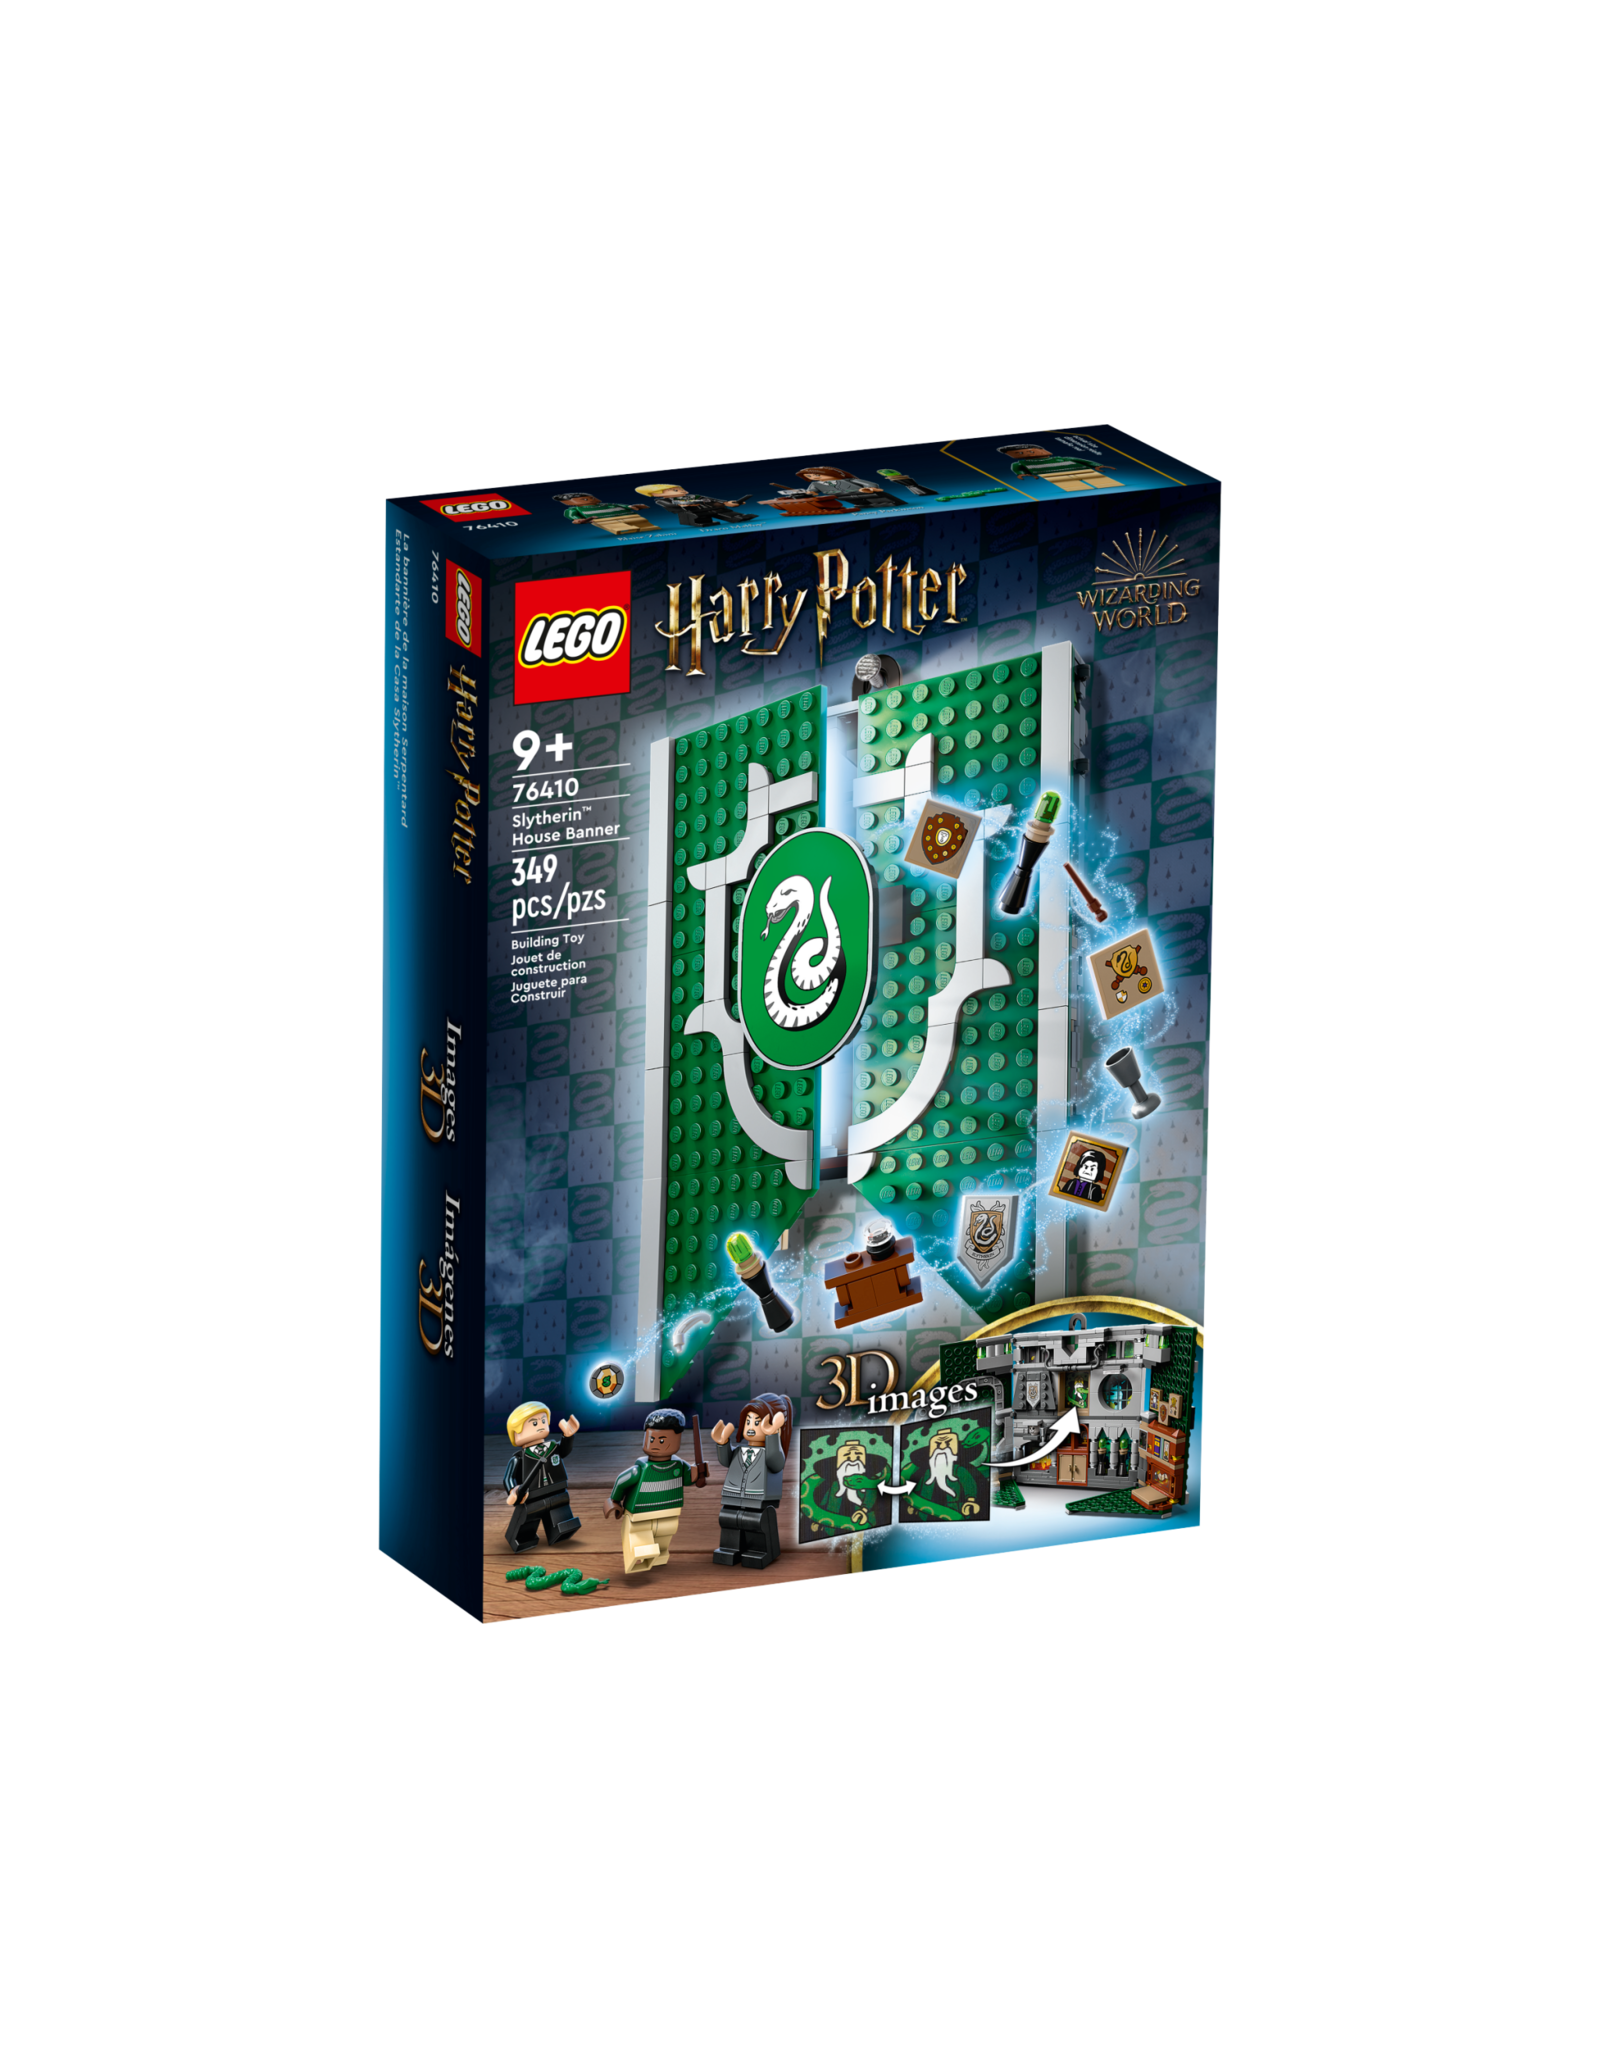 Lego Slytherin House Banner